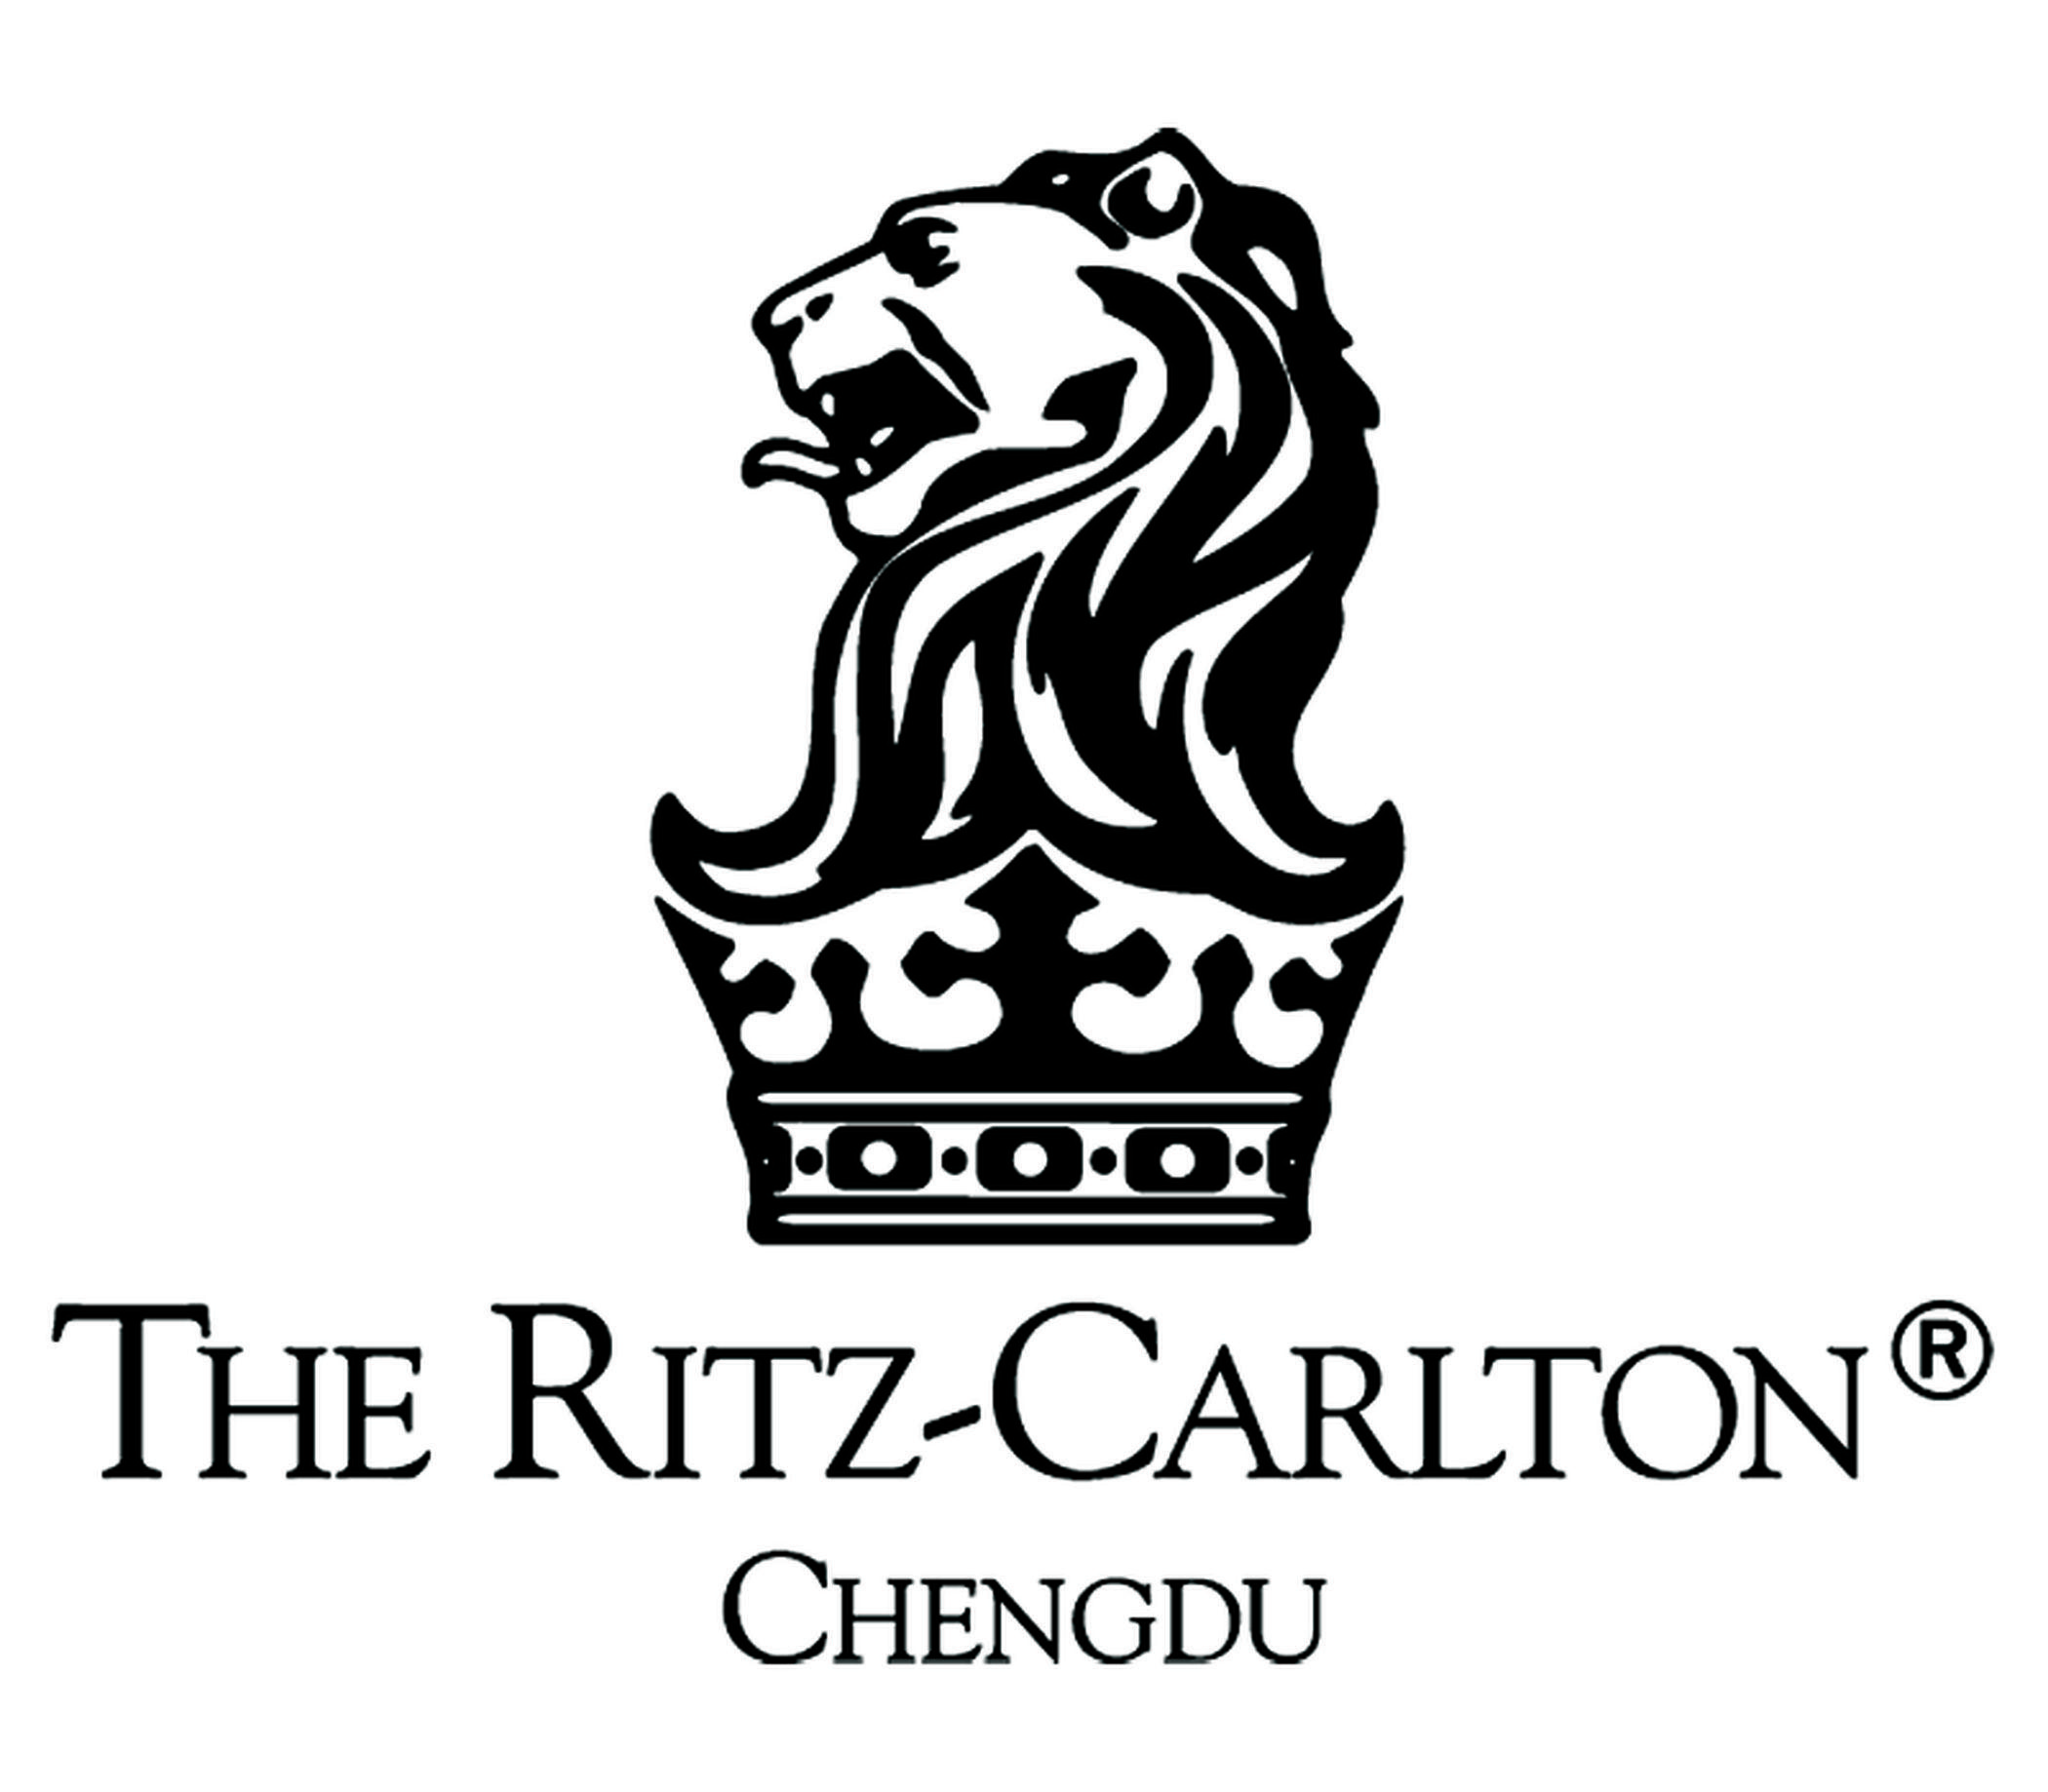 Ritz-Carlton Logo - The Ritz Carlton, Chengdu Logo Expat. Chengdu Expat.com